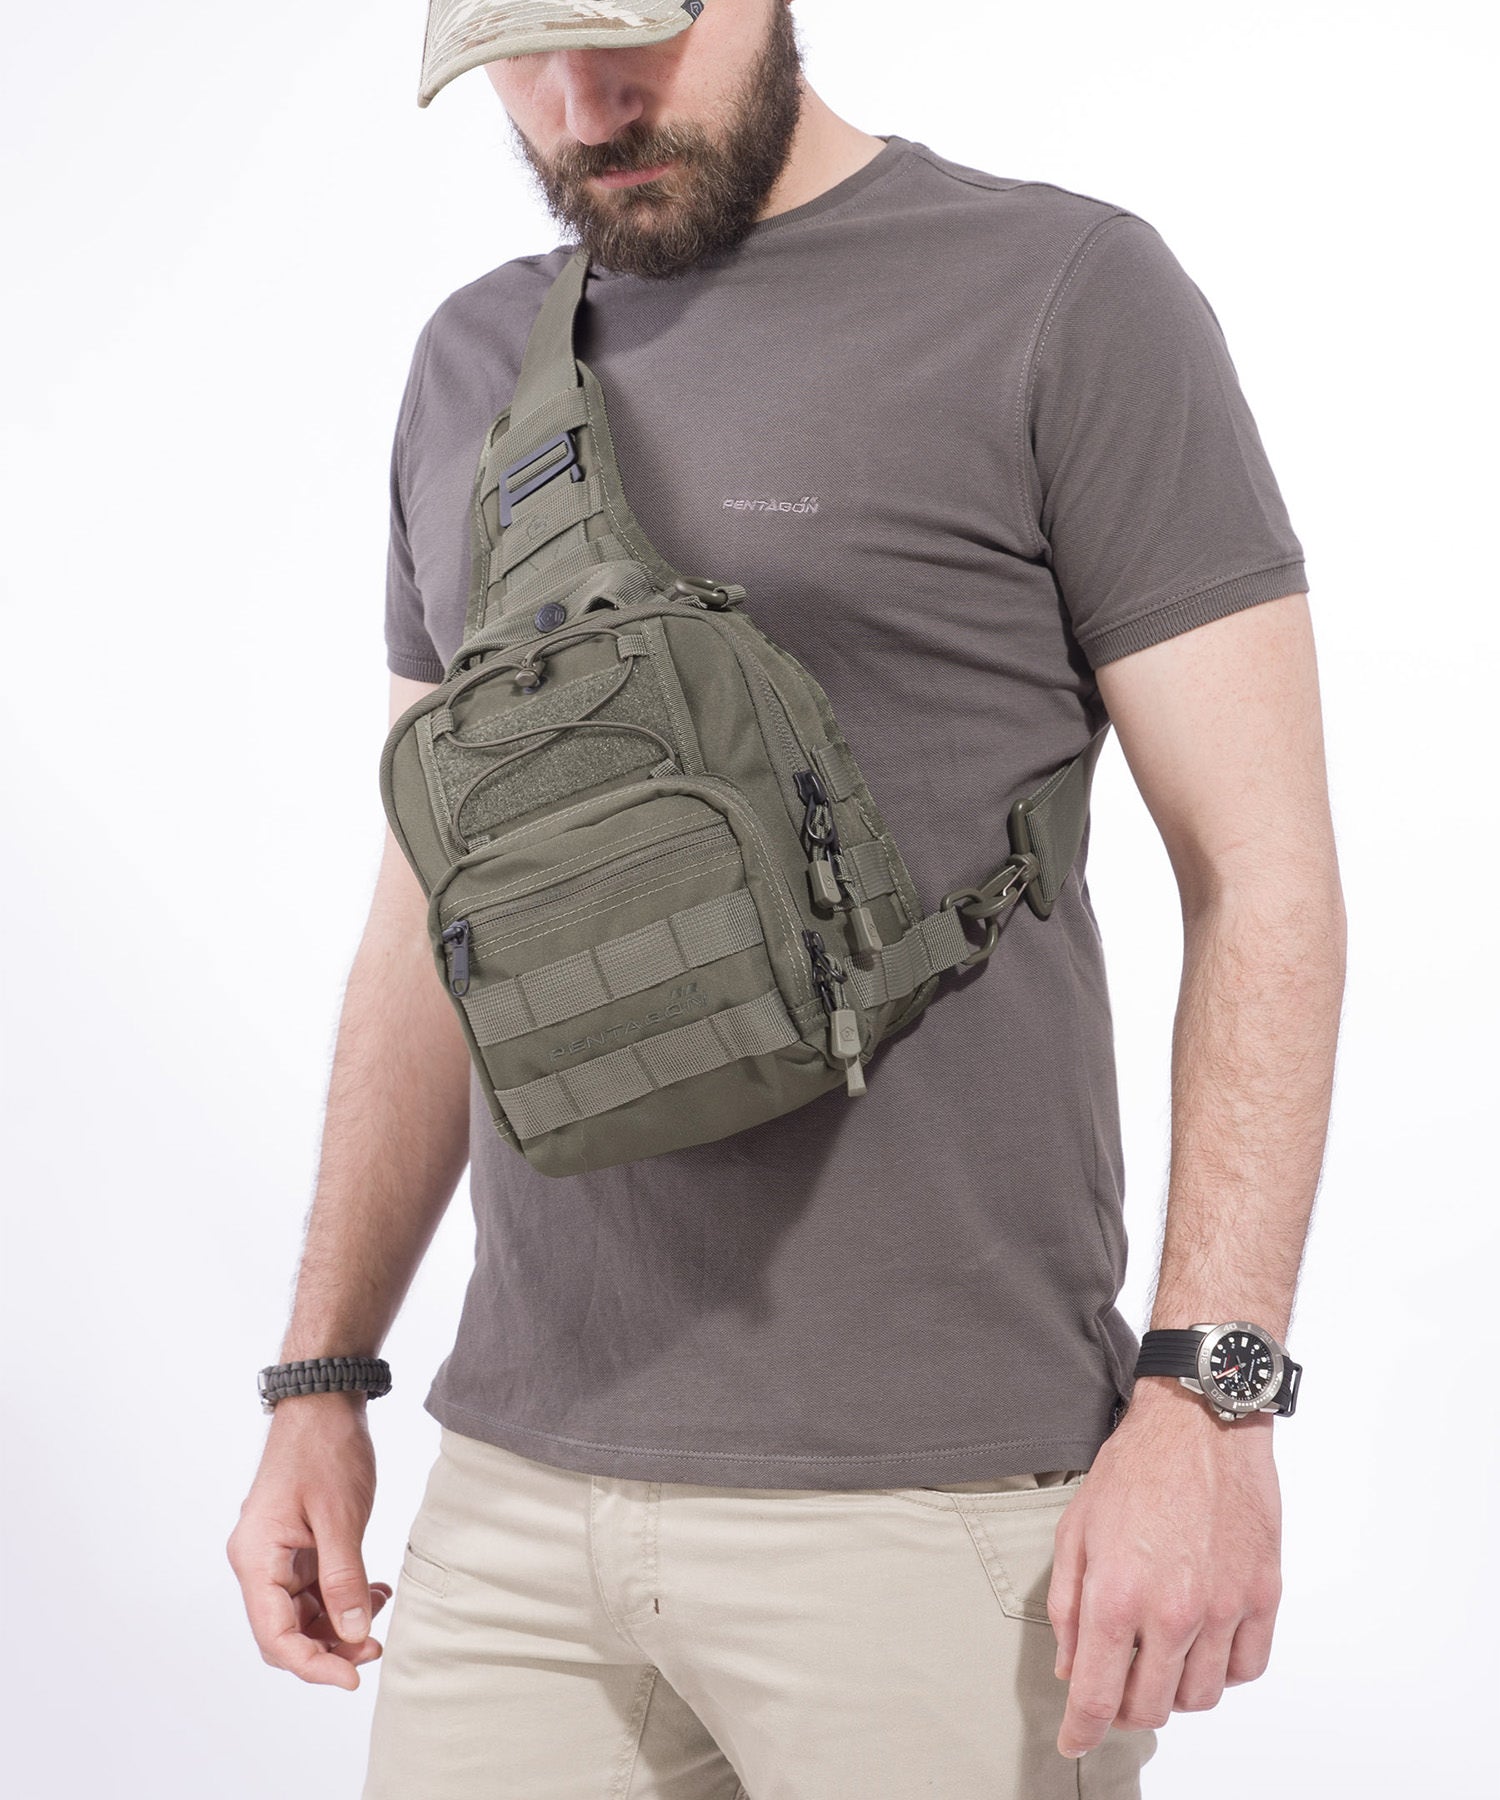 universal chest bag 2.0 di Pentagon indossata sul petto